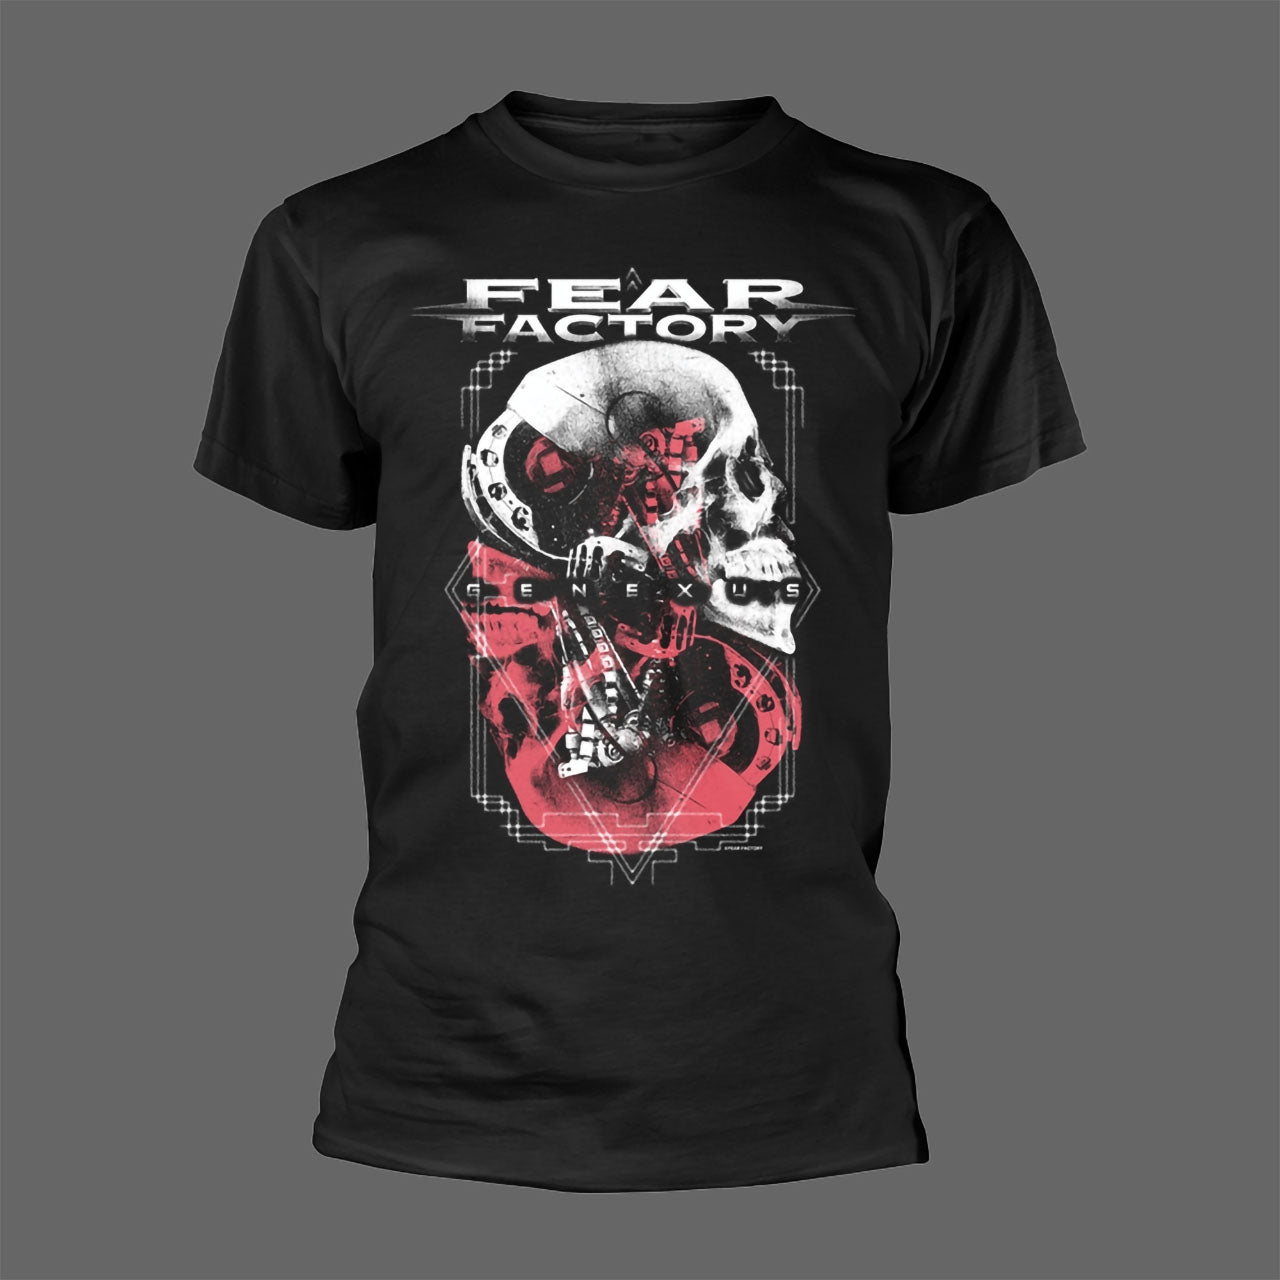 Fear Factory - Genexus Skull Poster (T-Shirt)